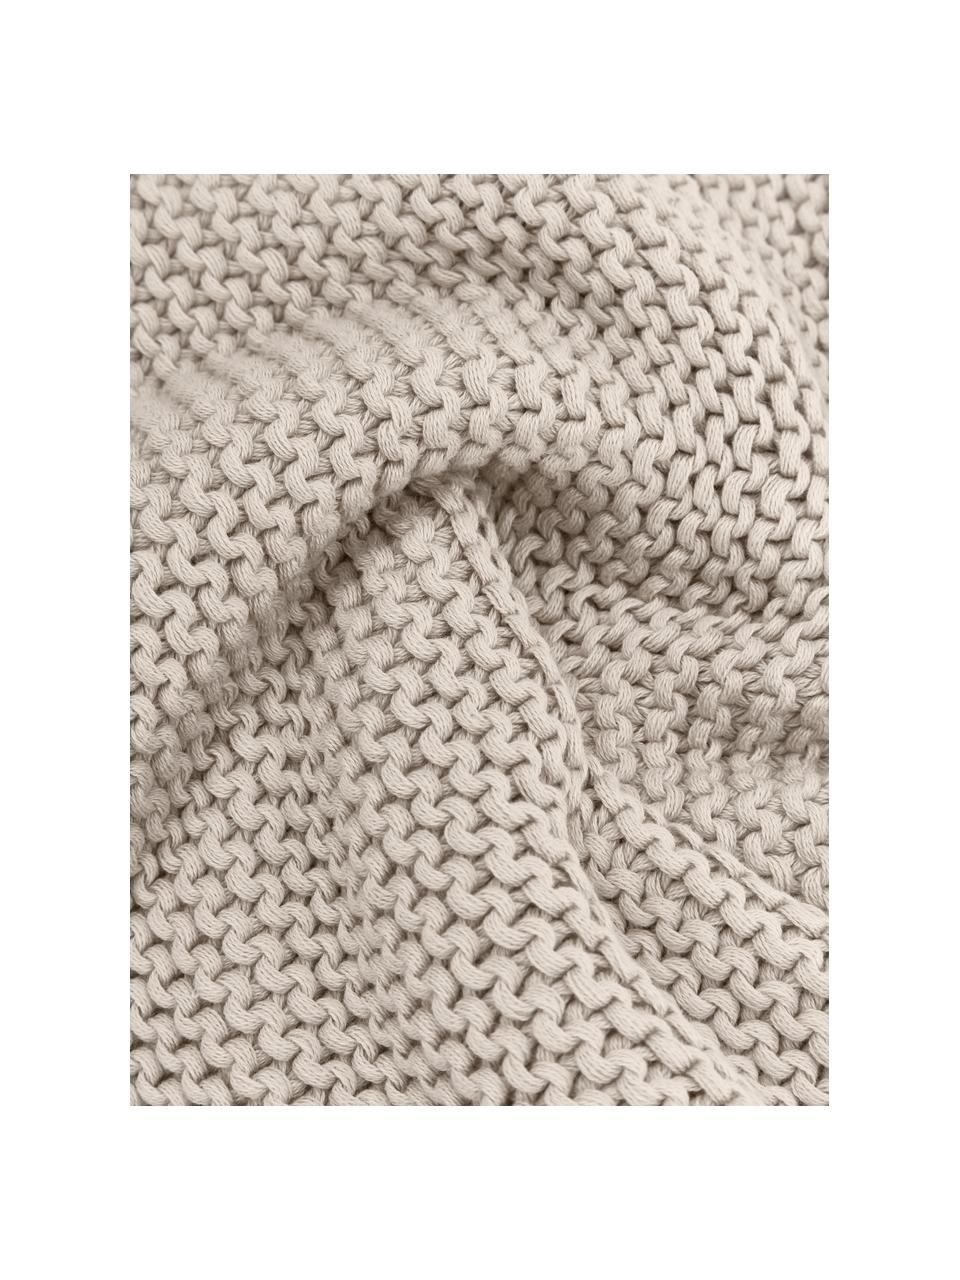 Strick-Kissenhülle Adalyn aus Bio-Baumwolle in Beige, 100% Bio-Baumwolle, GOTS-zertifiziert, Beige, 50 x 50 cm